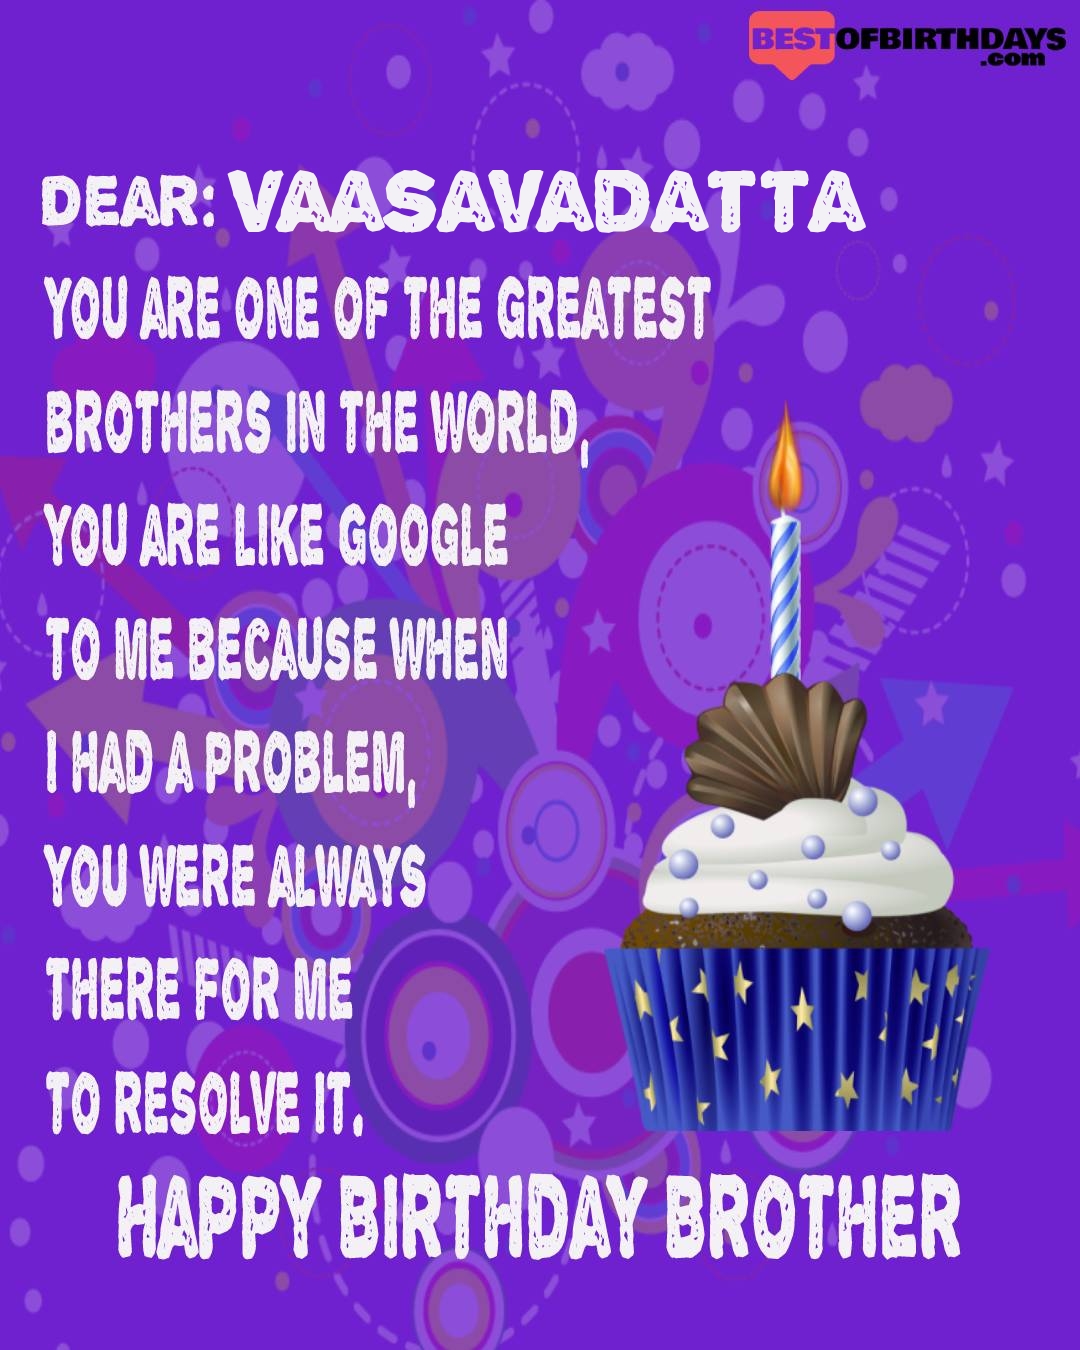 Happy birthday vaasavadatta bhai brother bro